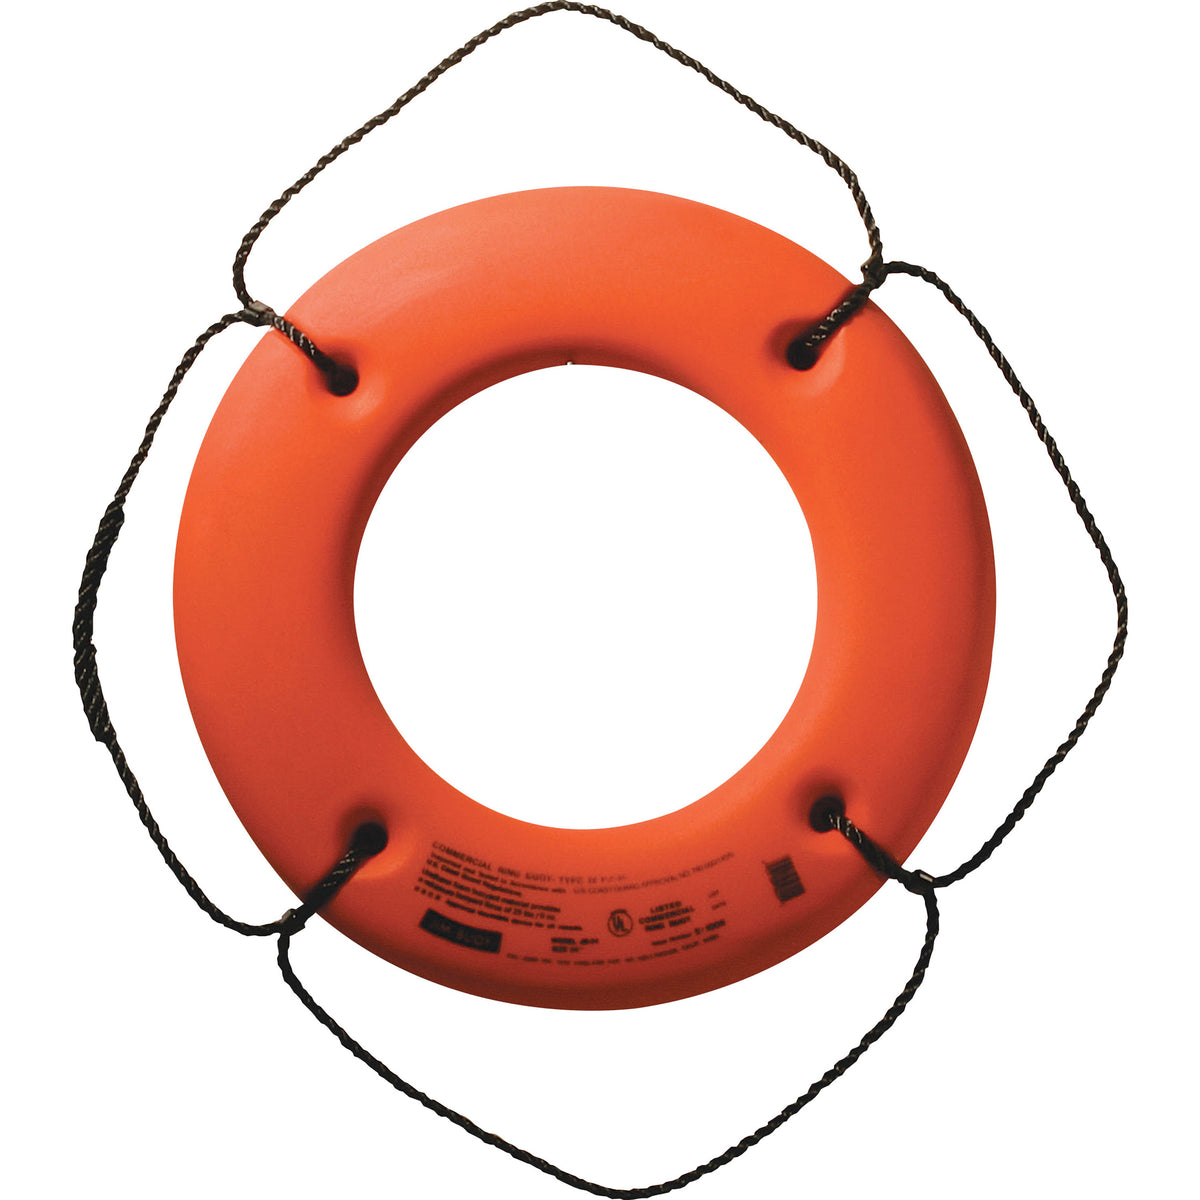 Jim-Buoy HS-20 O Hard Shell Series Life Ring - 20", Orange